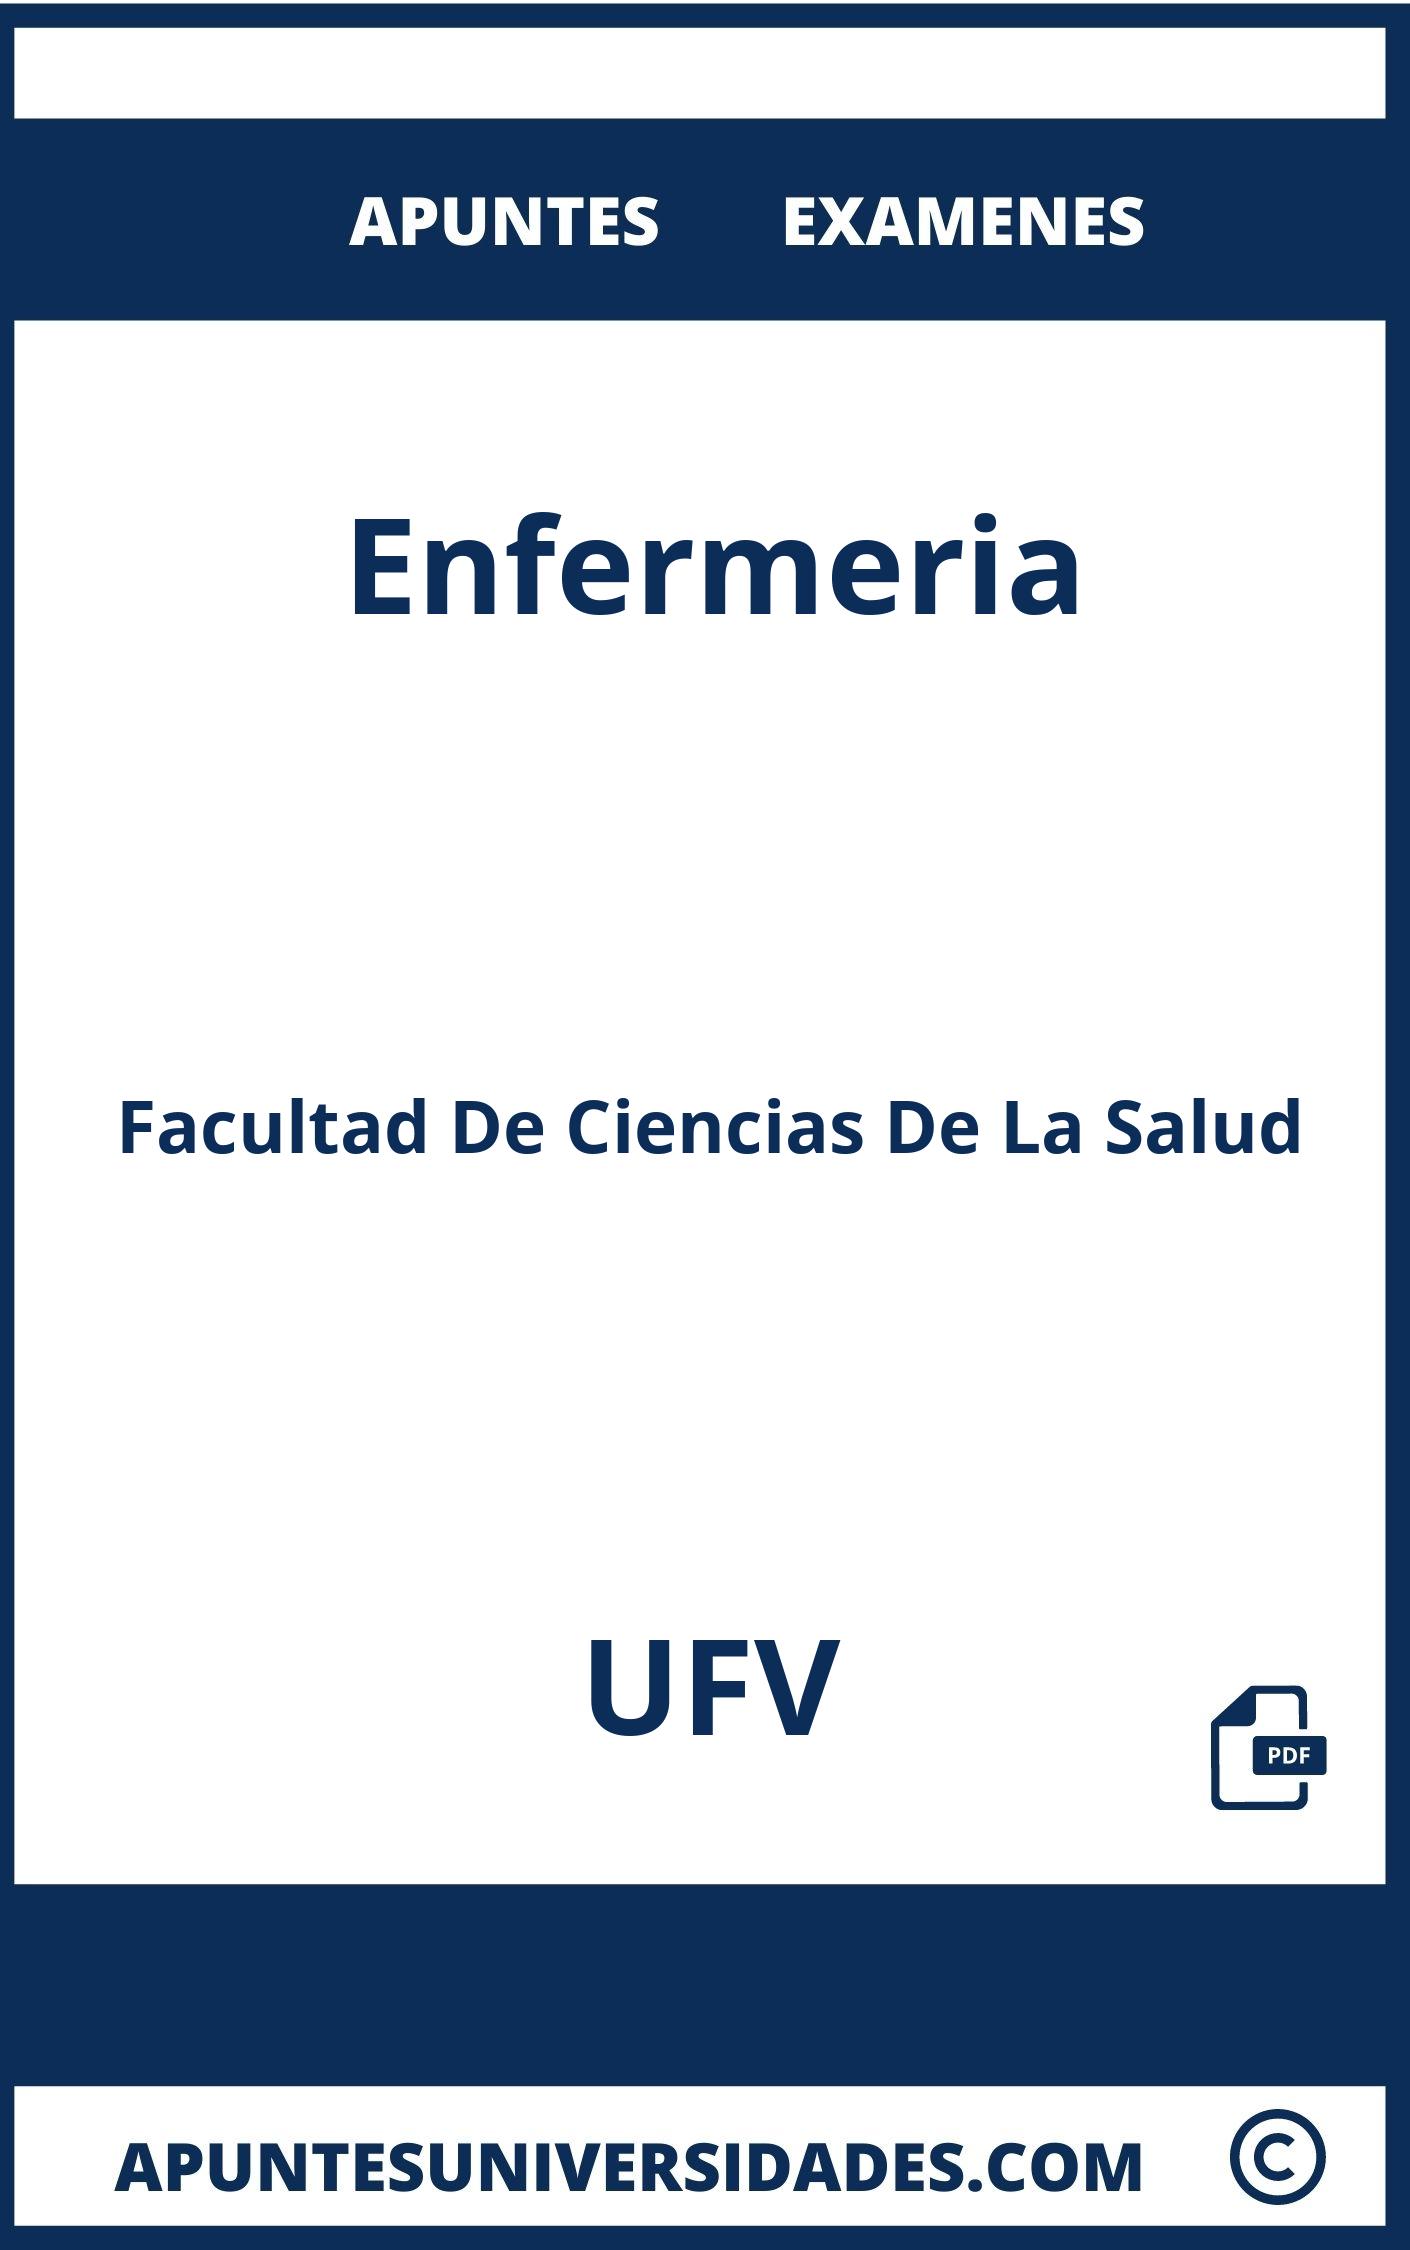 Examenes Apuntes Enfermeria UFV